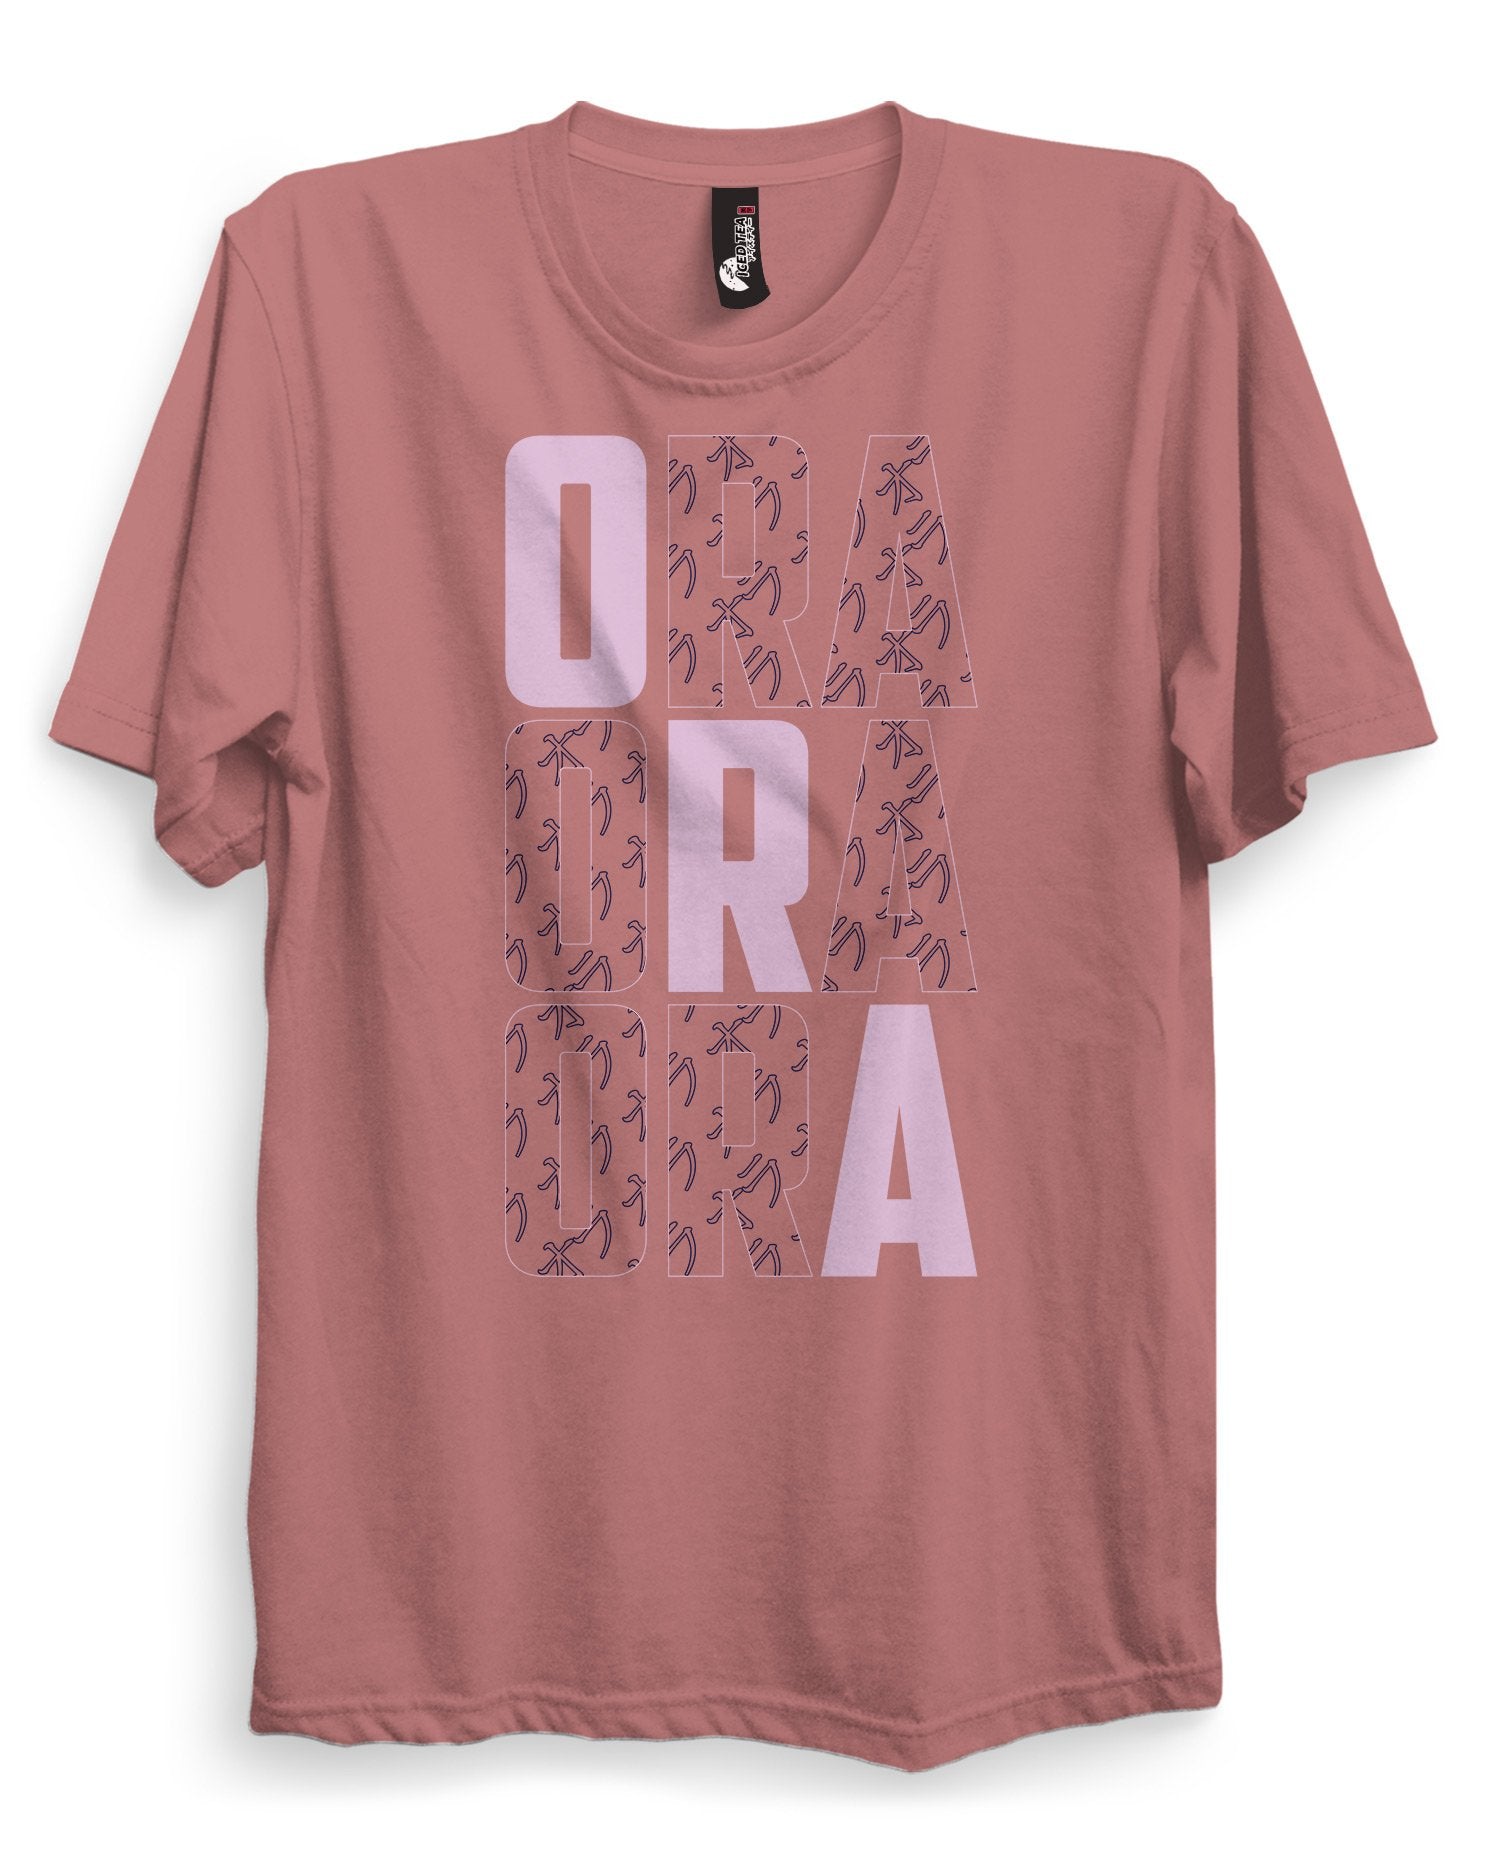 ORA ORA ORA - Anime T-Shirt - Dark Aesthetics and Anime Clothing Streetwear